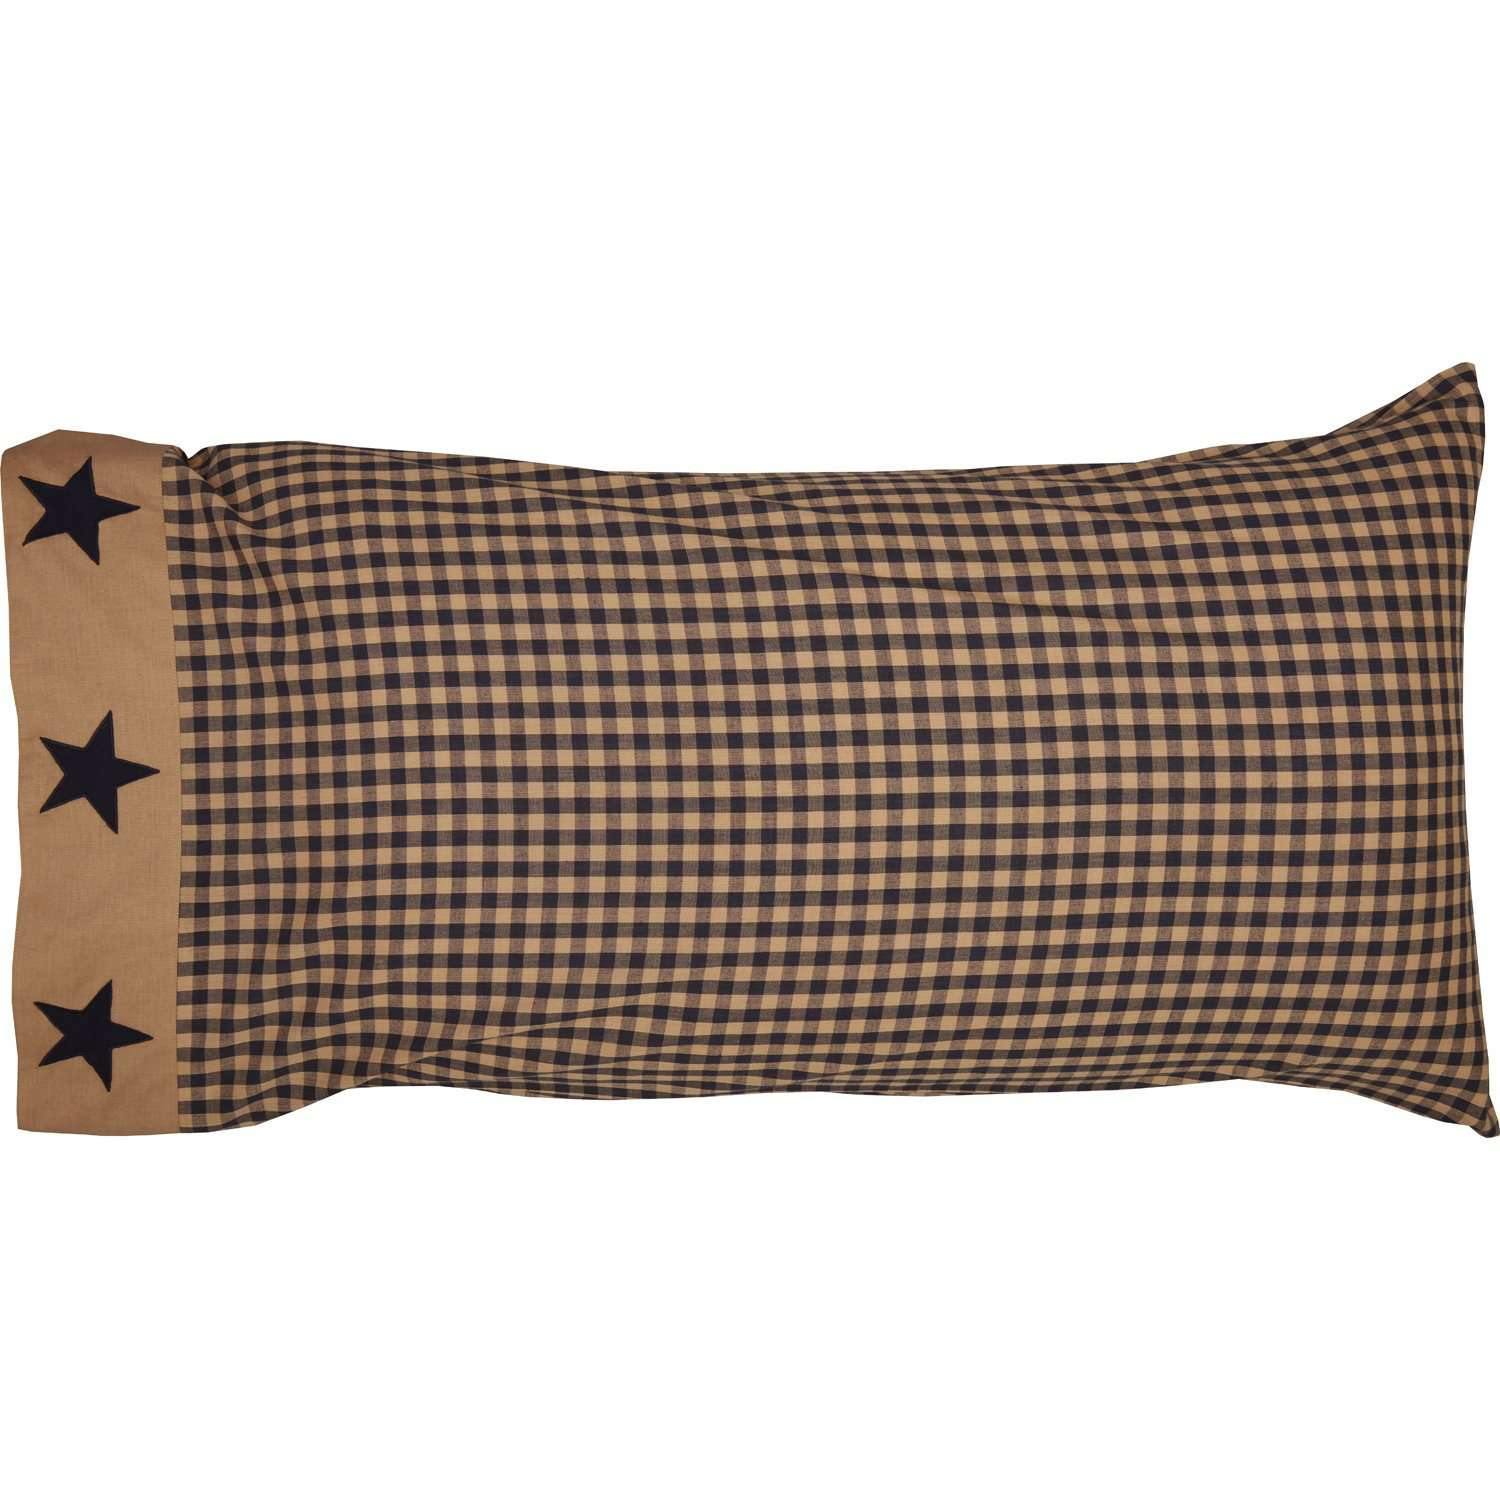 Teton Star King Pillow Case w/Applique Star Set of 2 21x40 VHC Brands - The Fox Decor